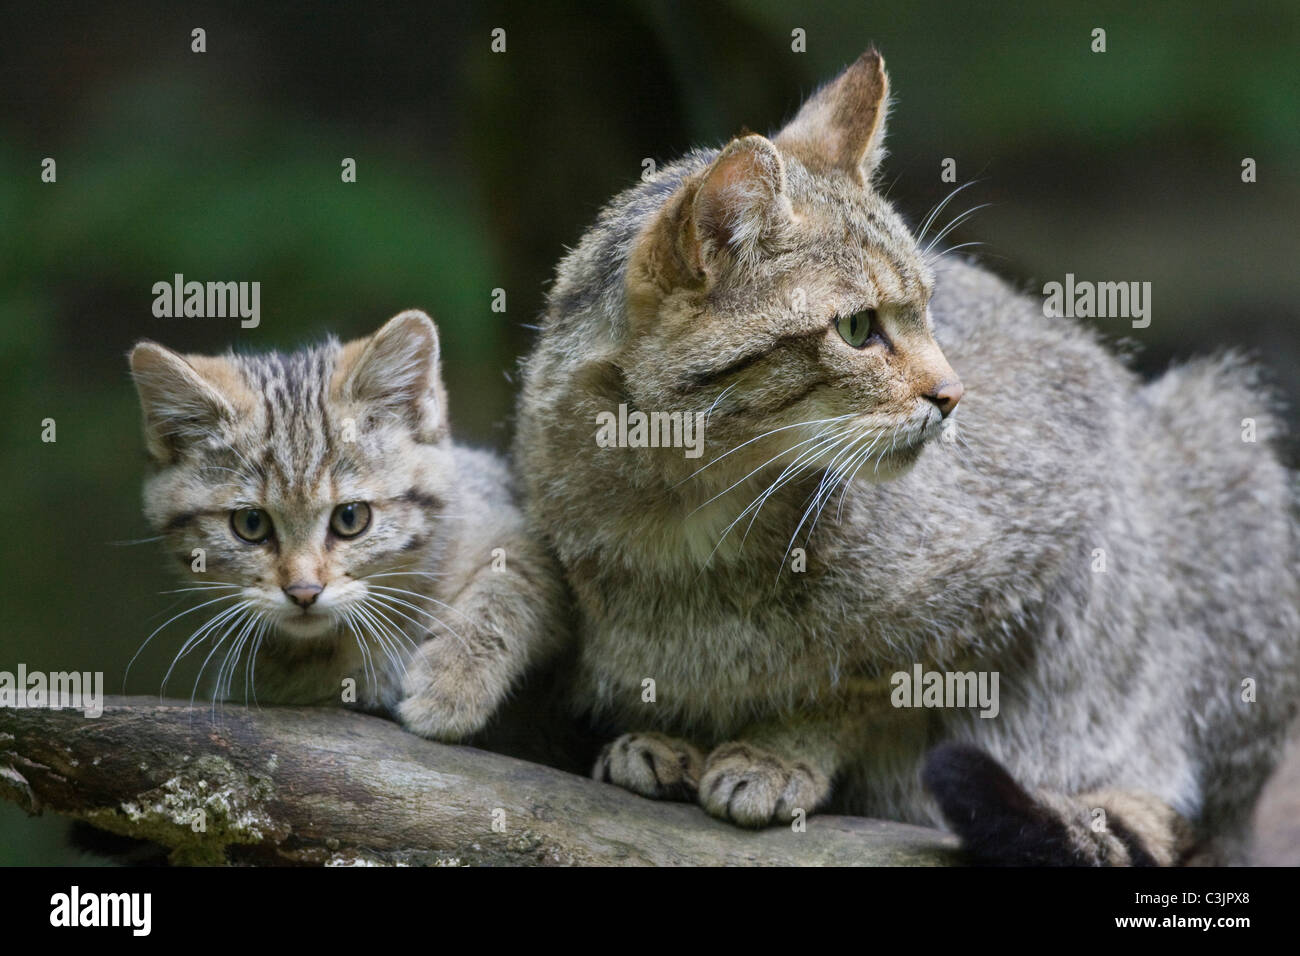 Wildkatze, mit Jungtier, Felis silvestris, Wild Cat, with young, NP Bayerischer Wald, Bavarian Forest National Park Stock Photo